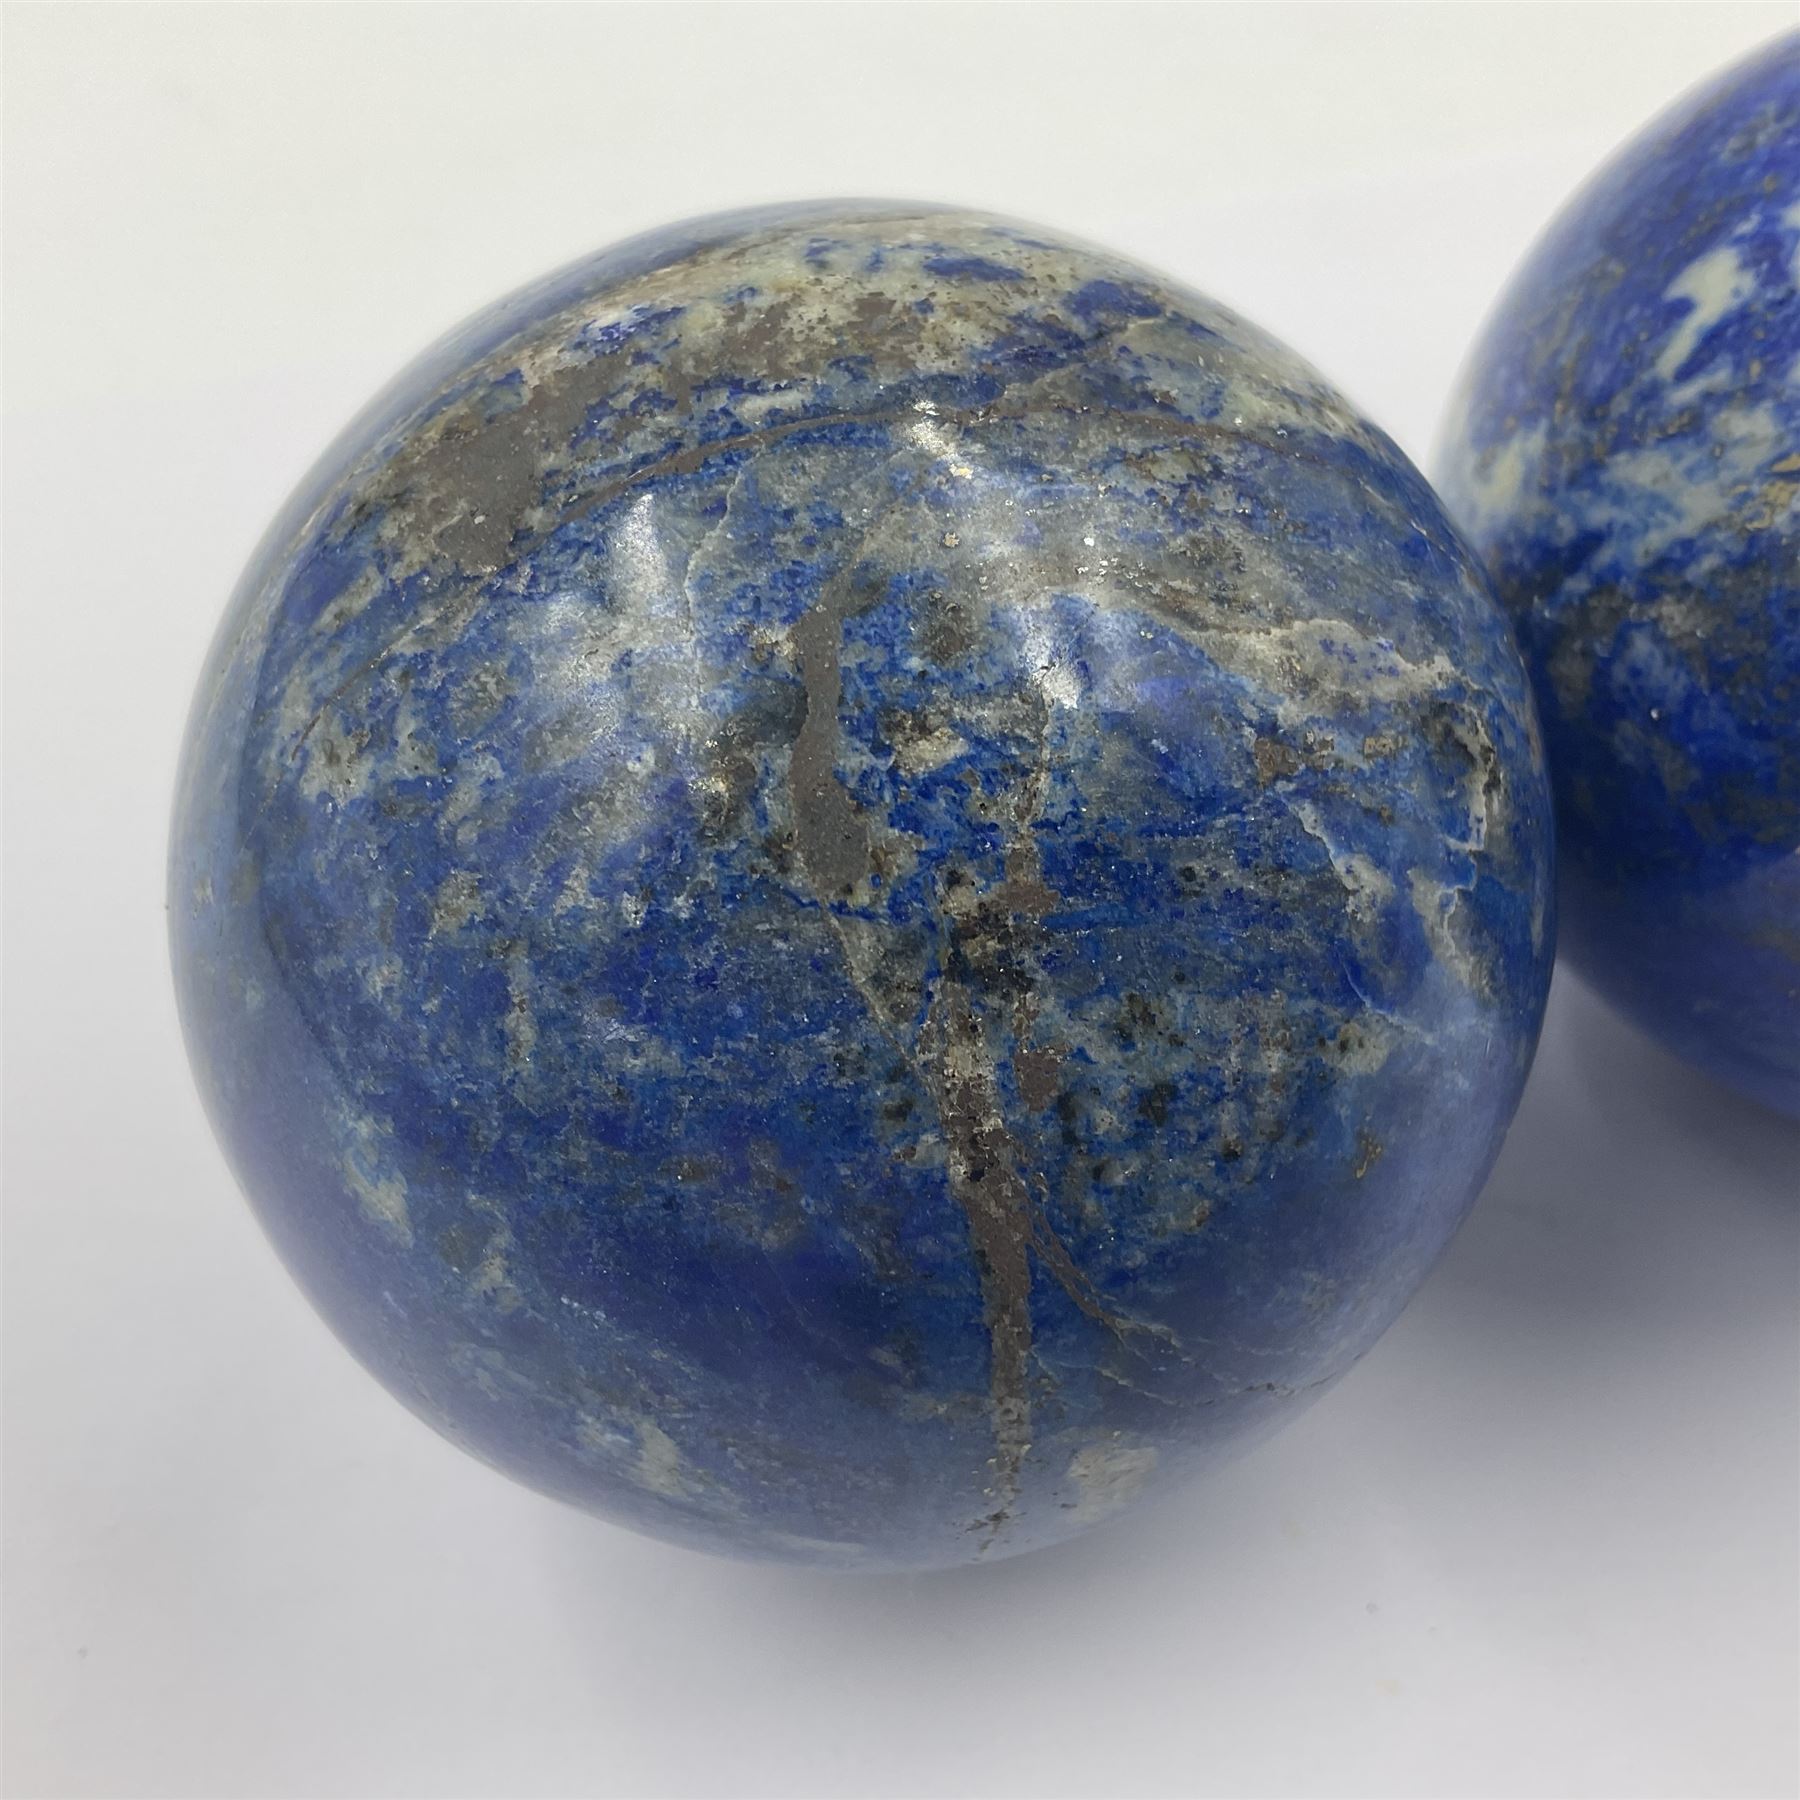 Pair of Lapis lazuli spheres - Image 3 of 8